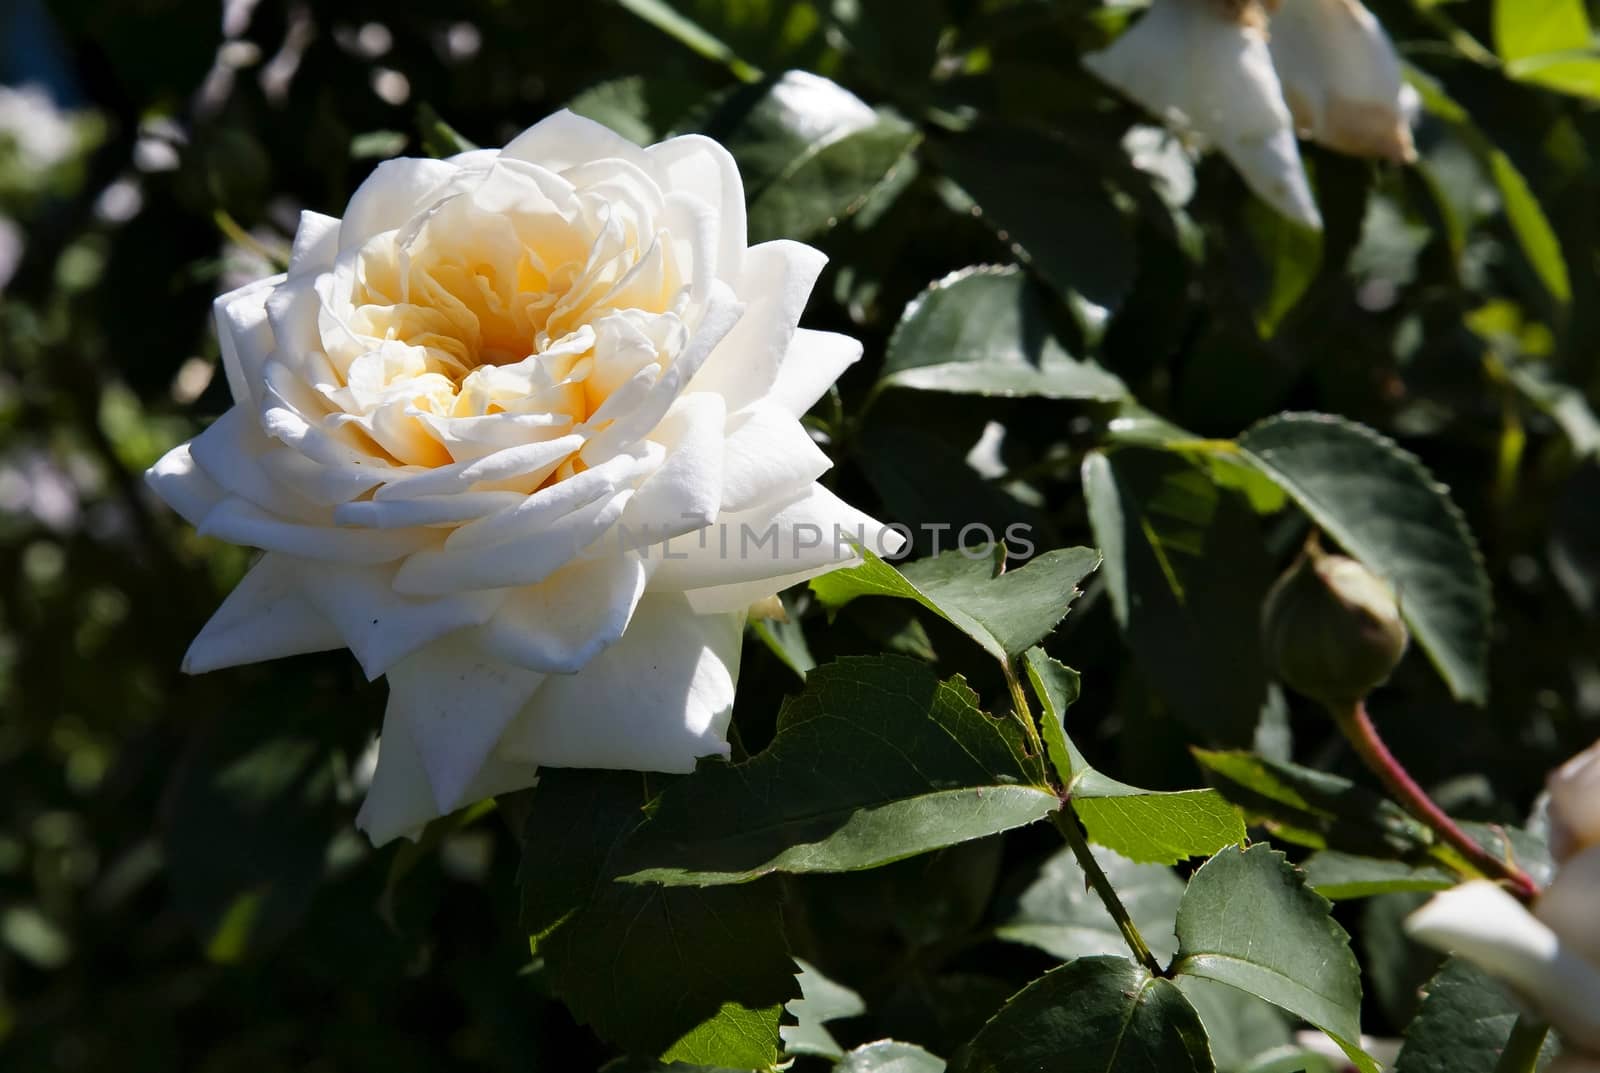 beautiful cream rose in bright morning sunlight